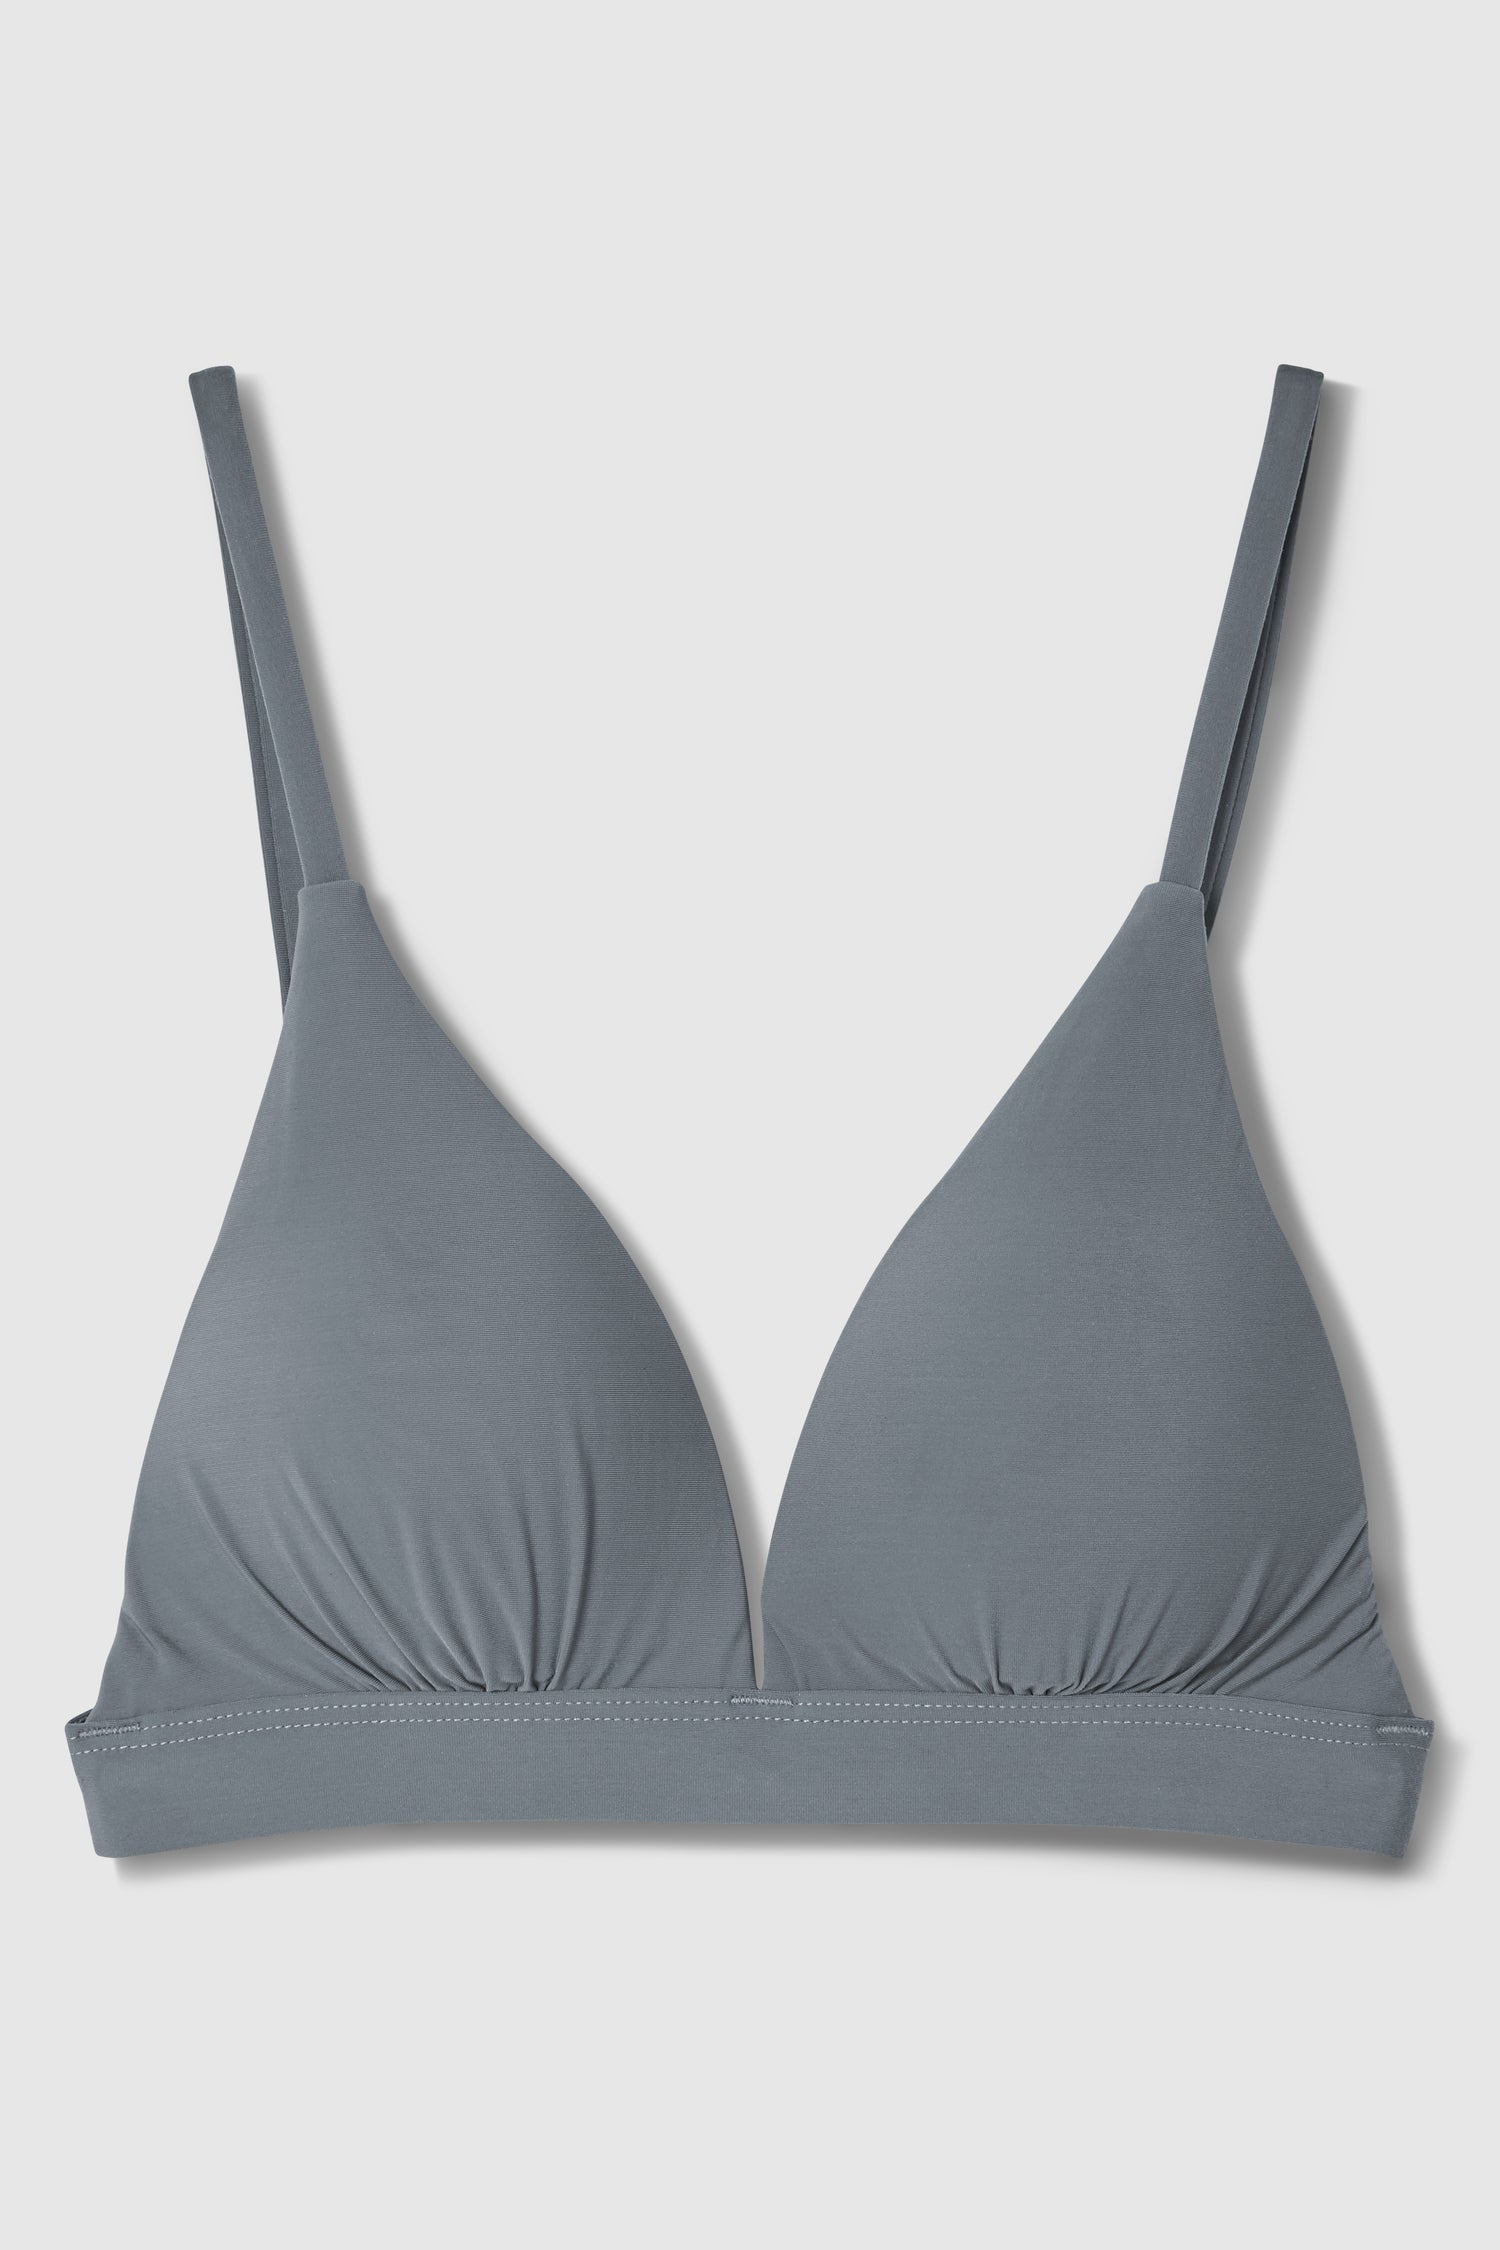 Quealent Womens Bras Comfortable Women's True Body Triangle Lace Racerback  Bra (Dark Gray,XL) 